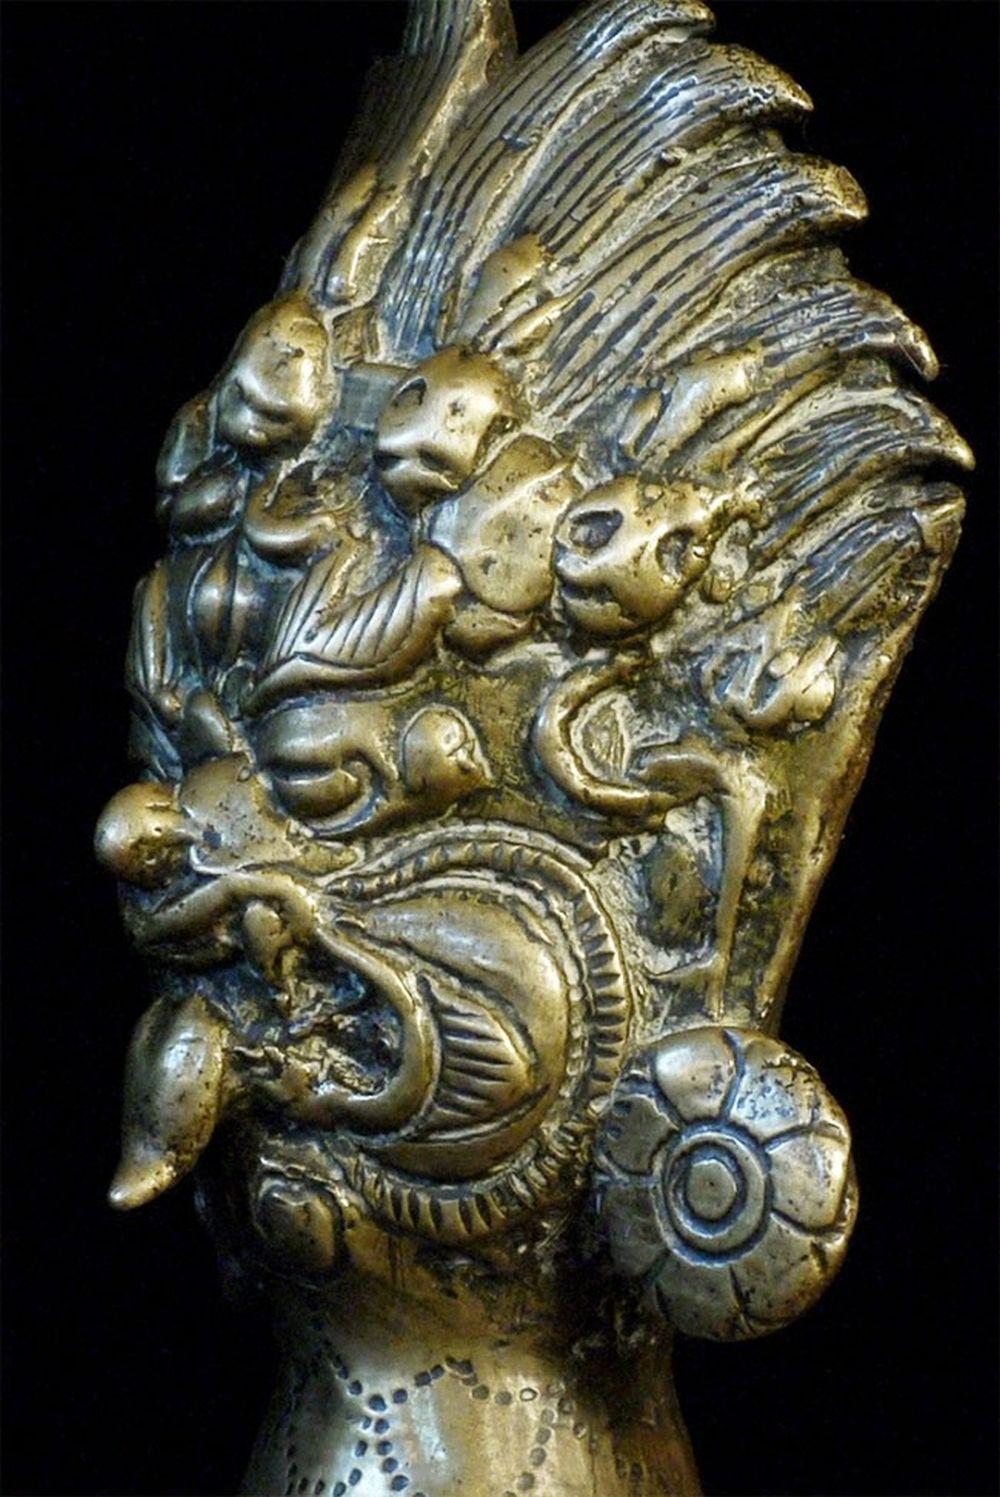 Cast 18th/19thC Nepalese Bronze or Brass Fierce Deity - 8630 For Sale